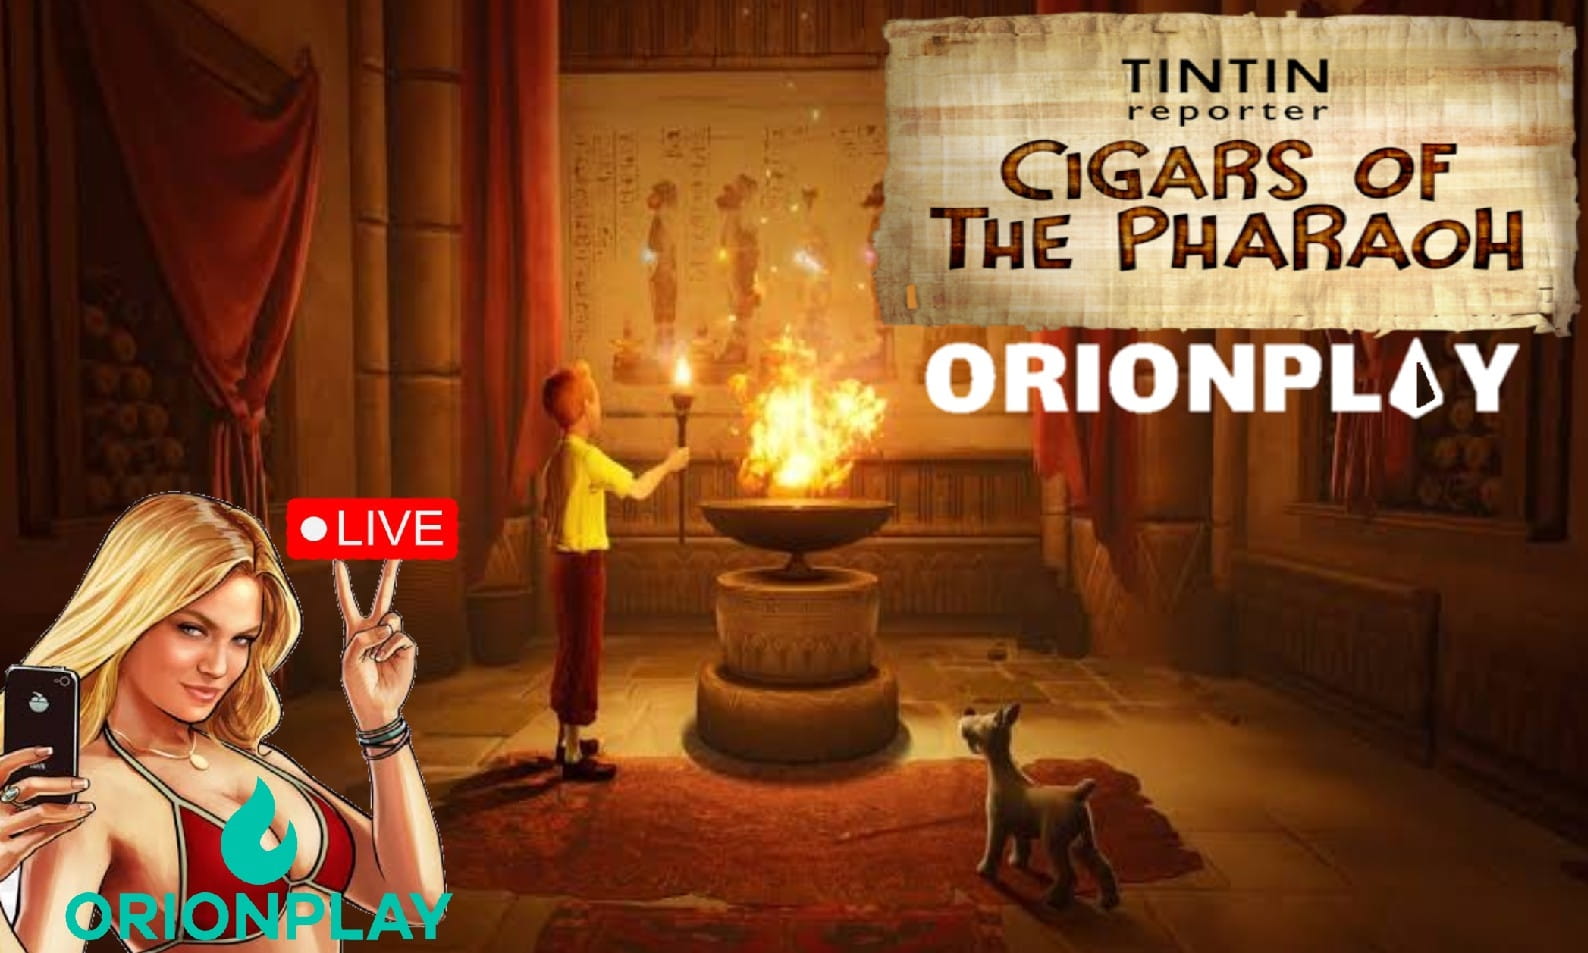 Tintin reporter cigars of the pharaoh Full Gameplay All Cutscenes.